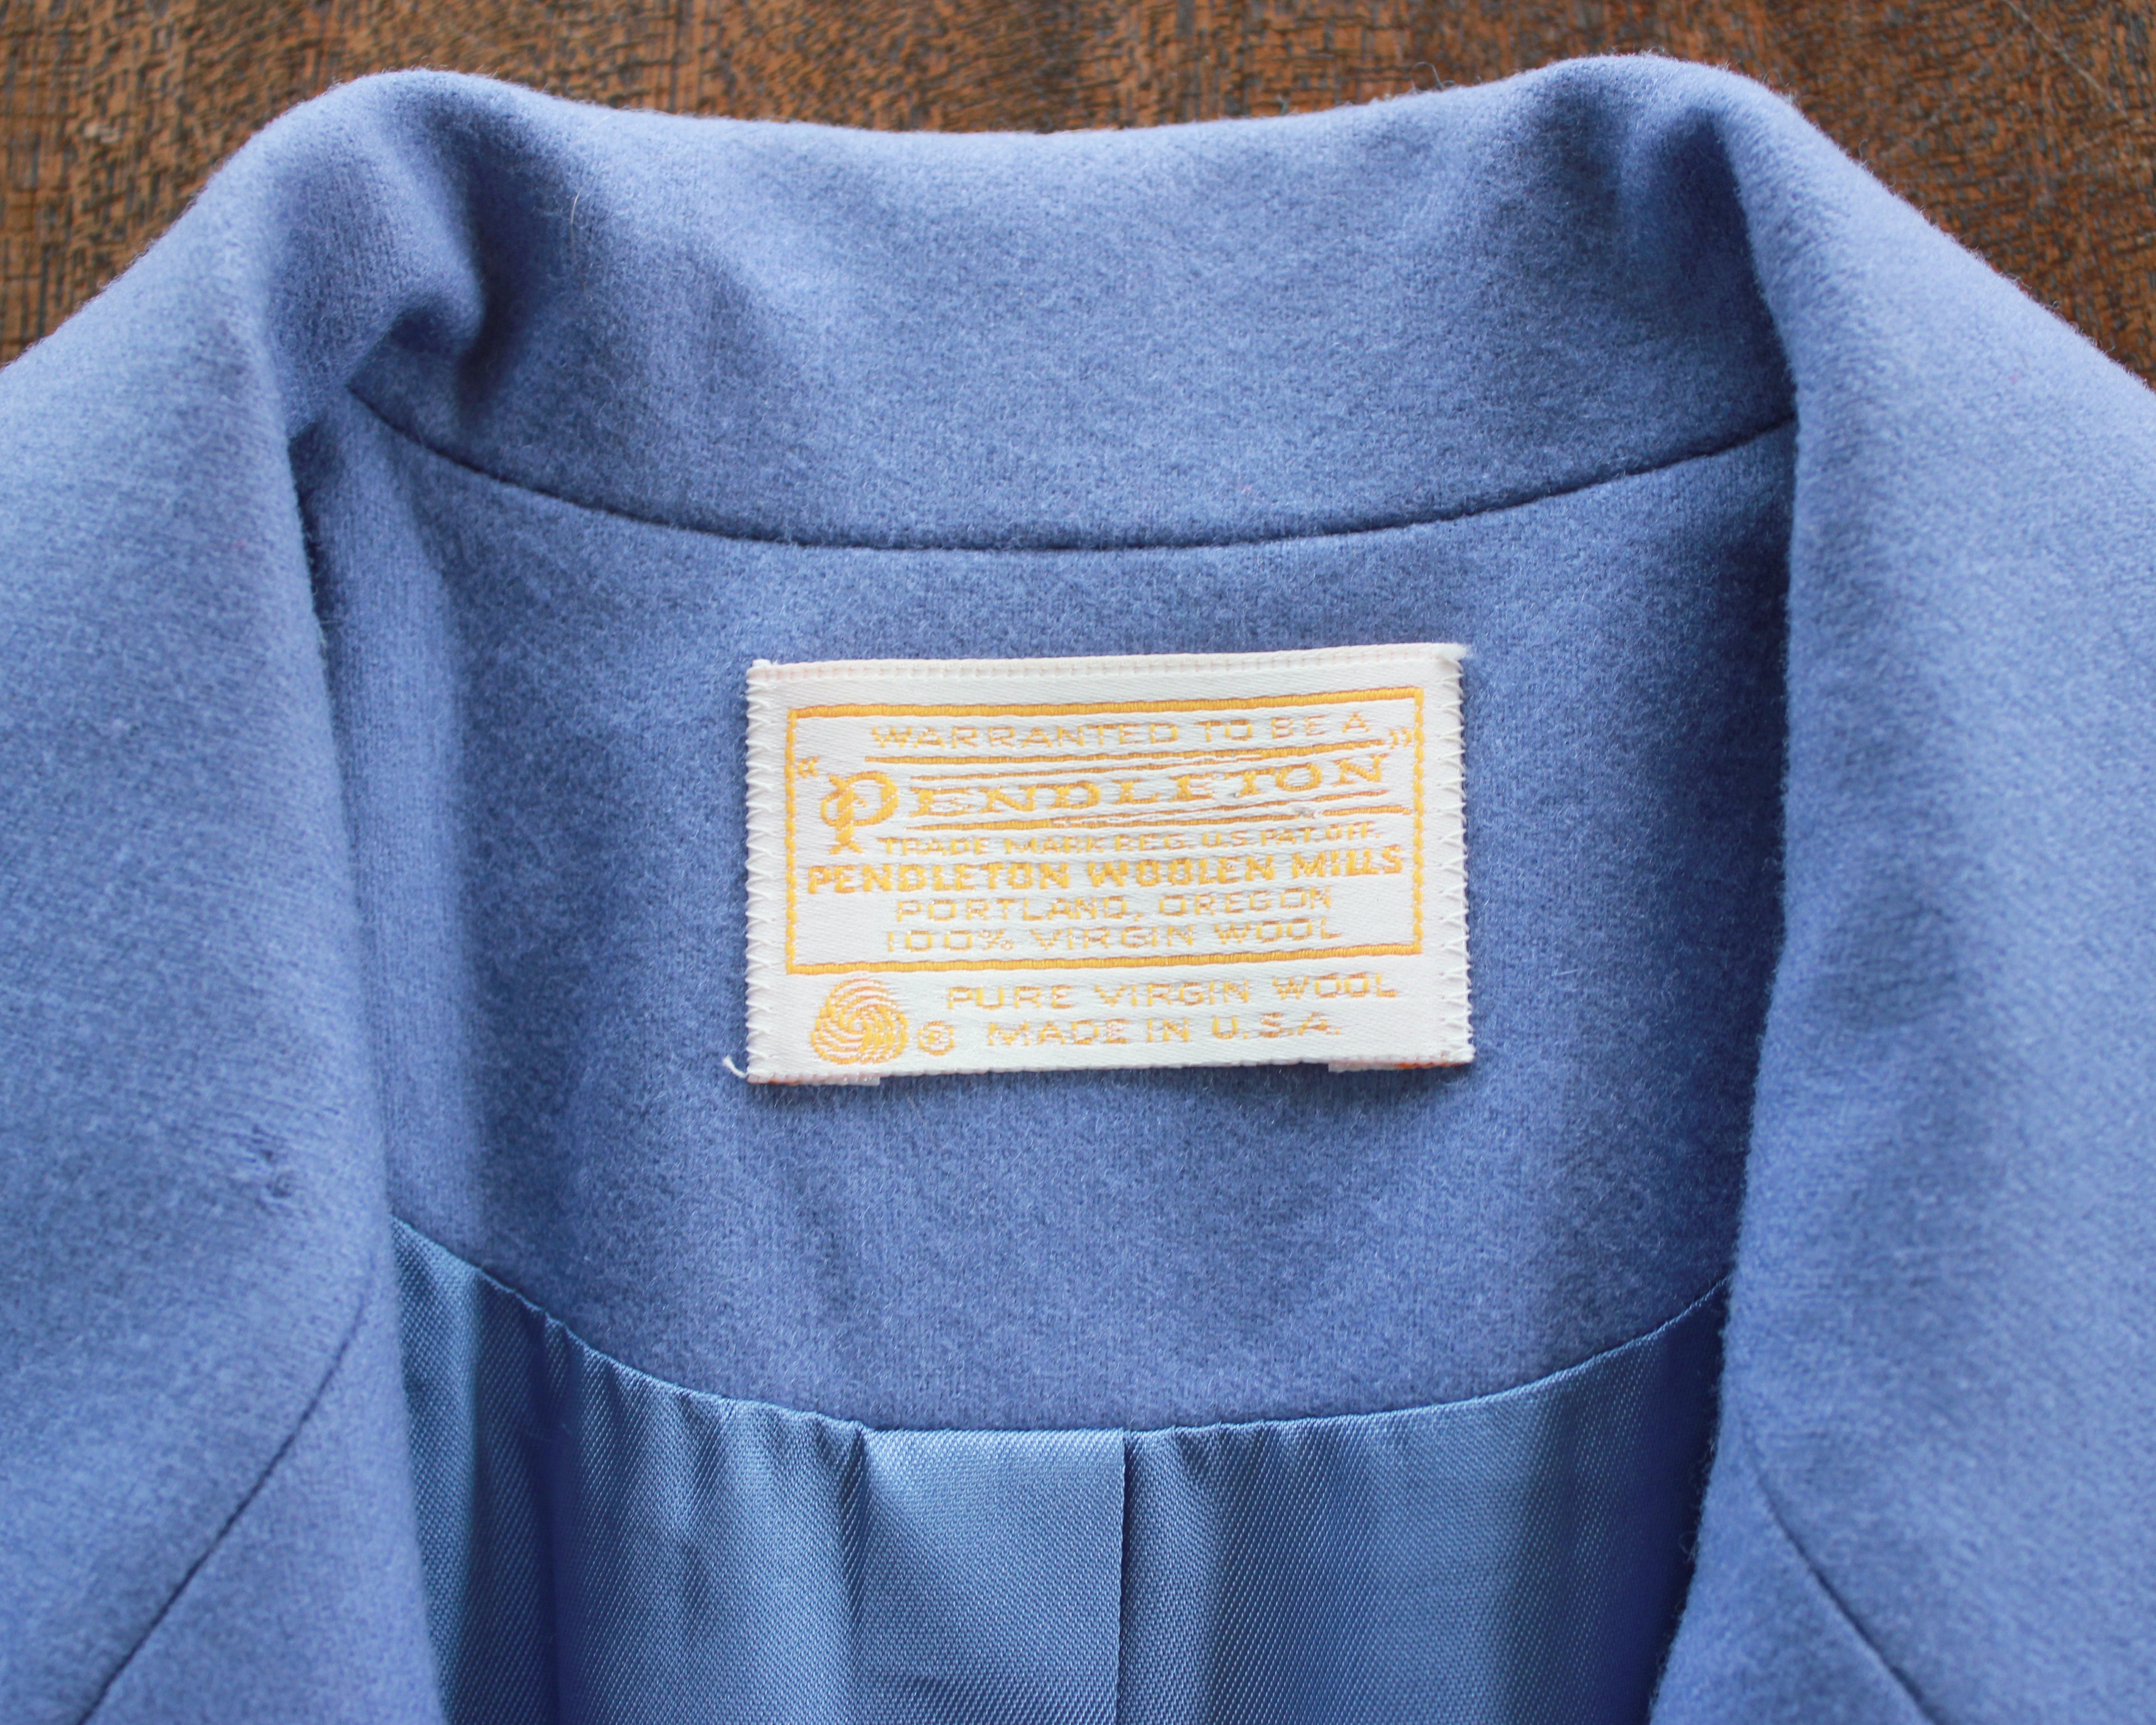 Pendleton Wool light blue blazer womens size 6 